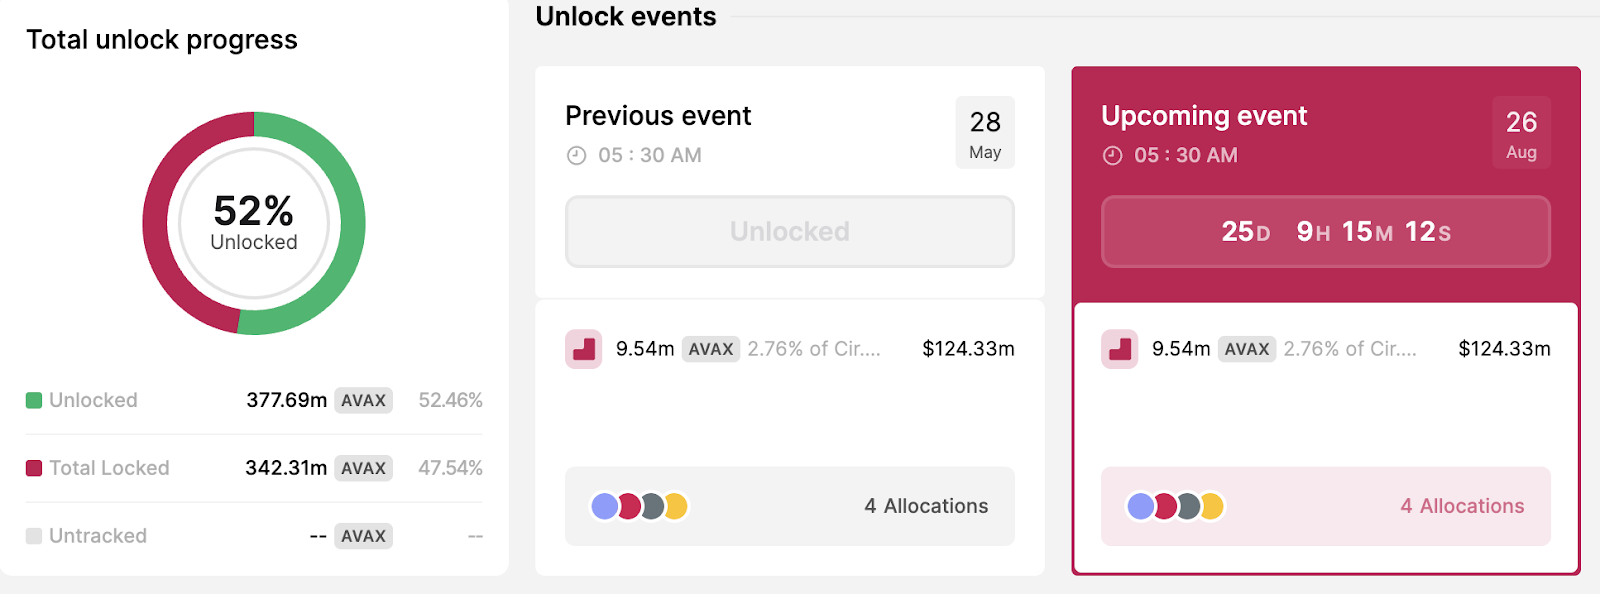 Token unlocks in August: Avalanche (AVAX) token unlock